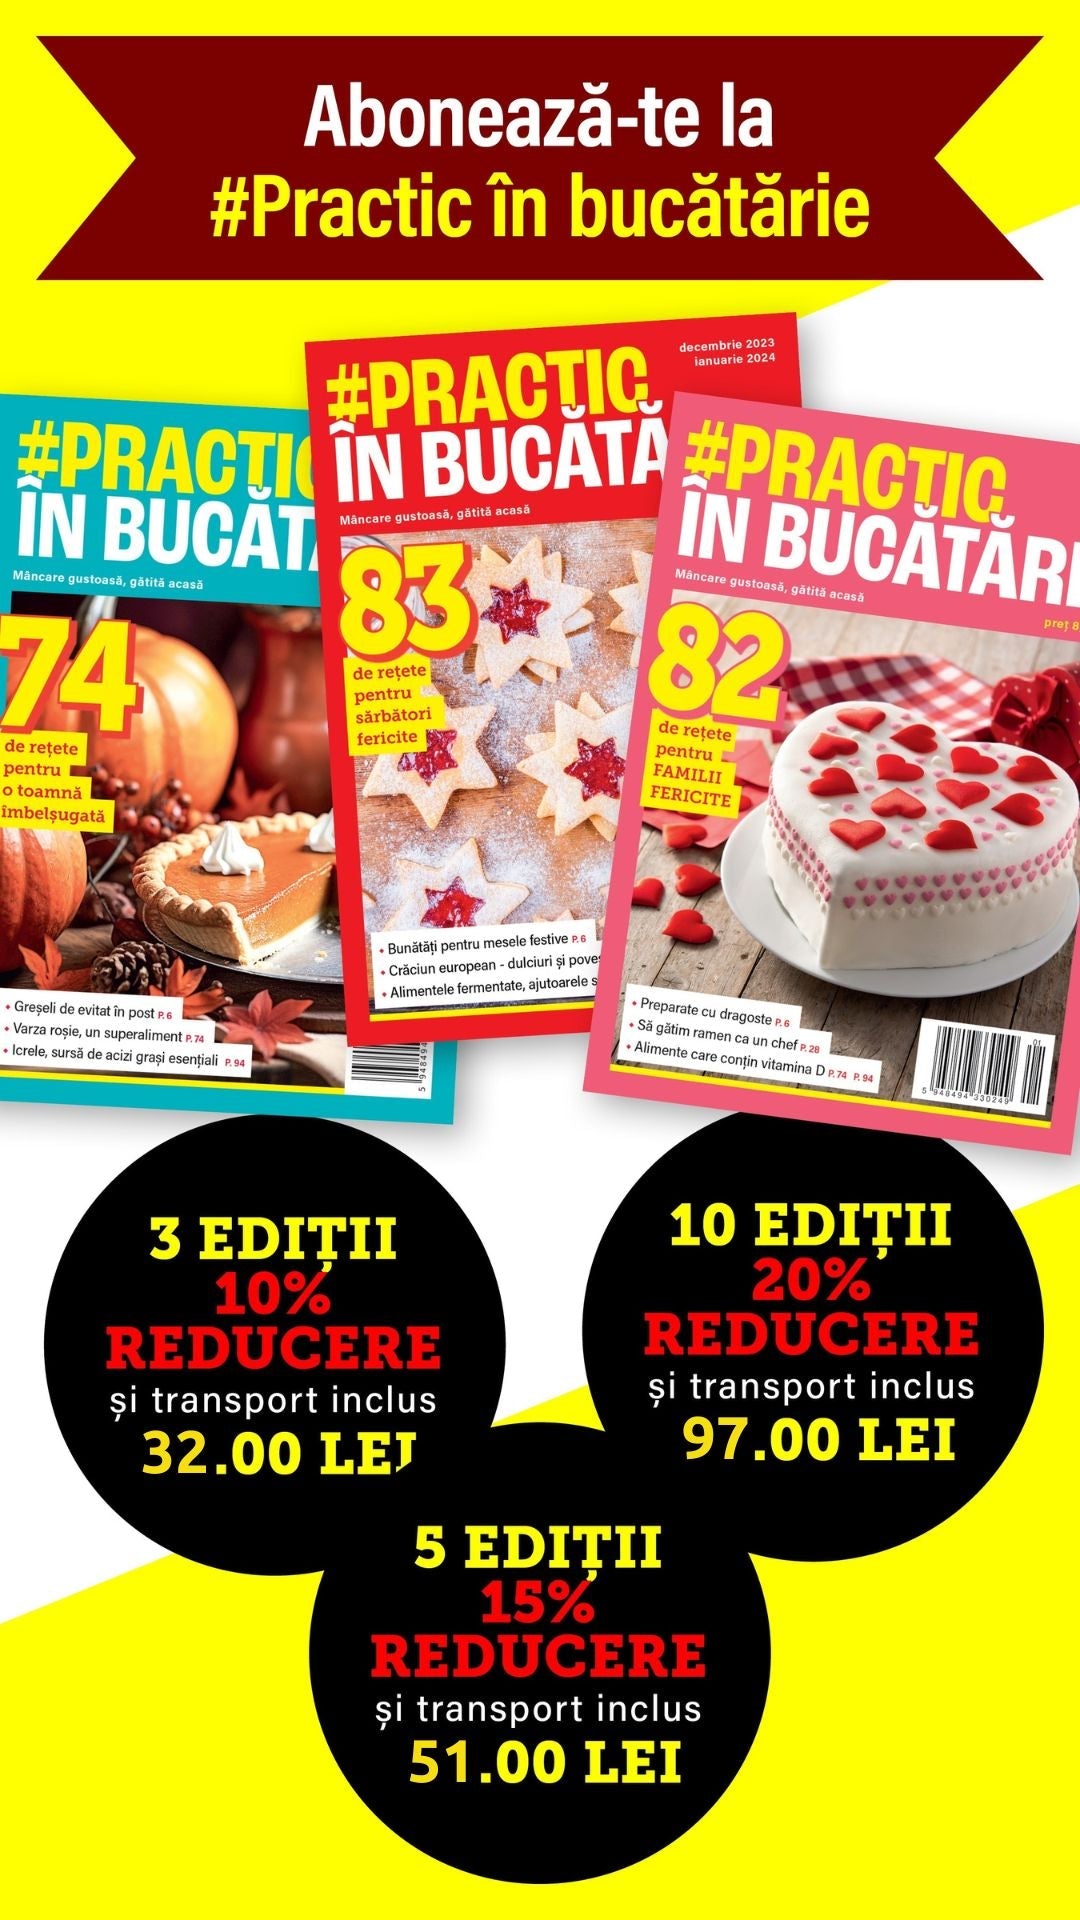 #Practic in bucatarie - Abonament - Publisol.ro